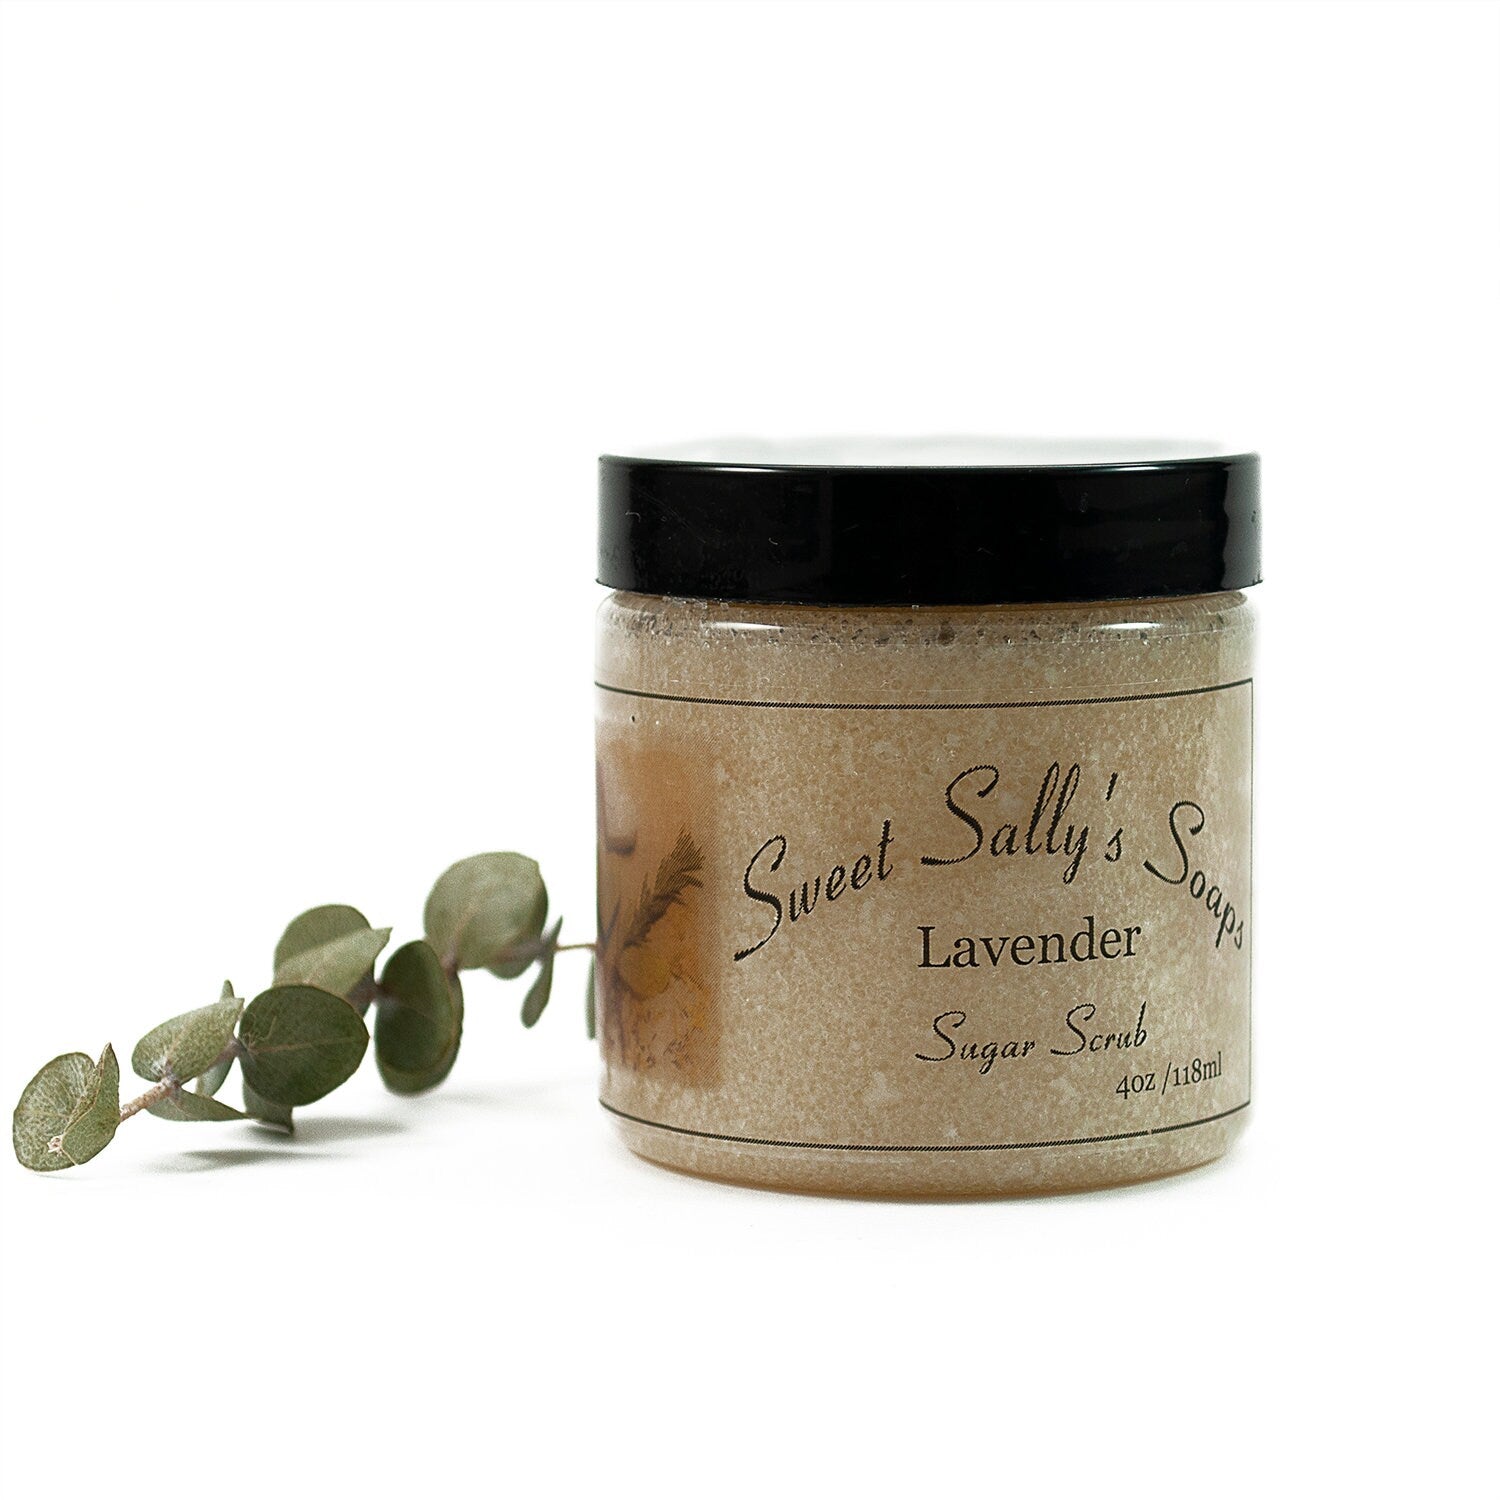 Lavender Self-Care Spa Gift Set, Lotion, Scrub, Soap, Bath Bombs